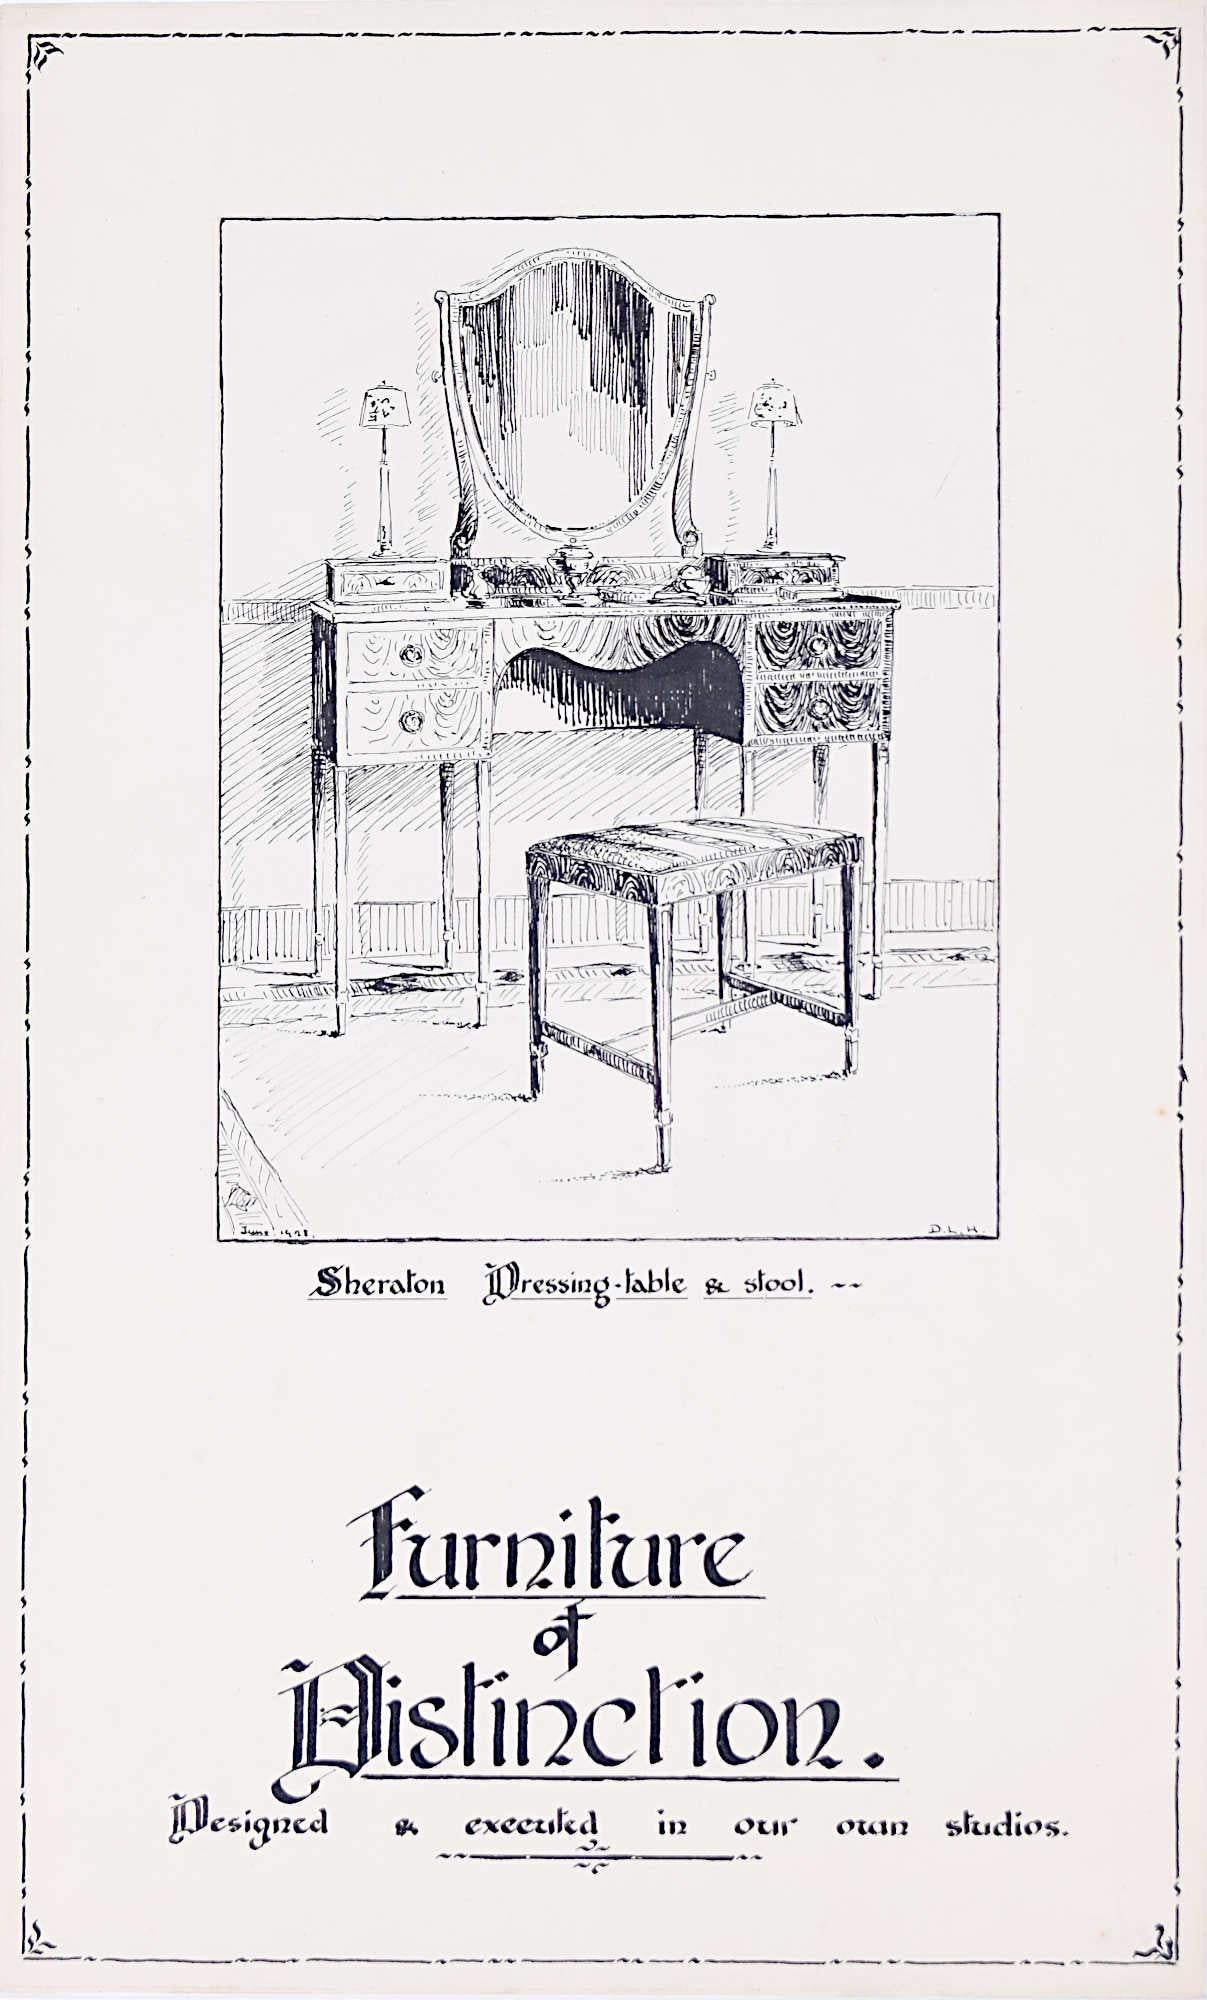 Donald L. Hadden Interior Art - Furniture of Distinction 1930s poster design - George M Hammer designers London